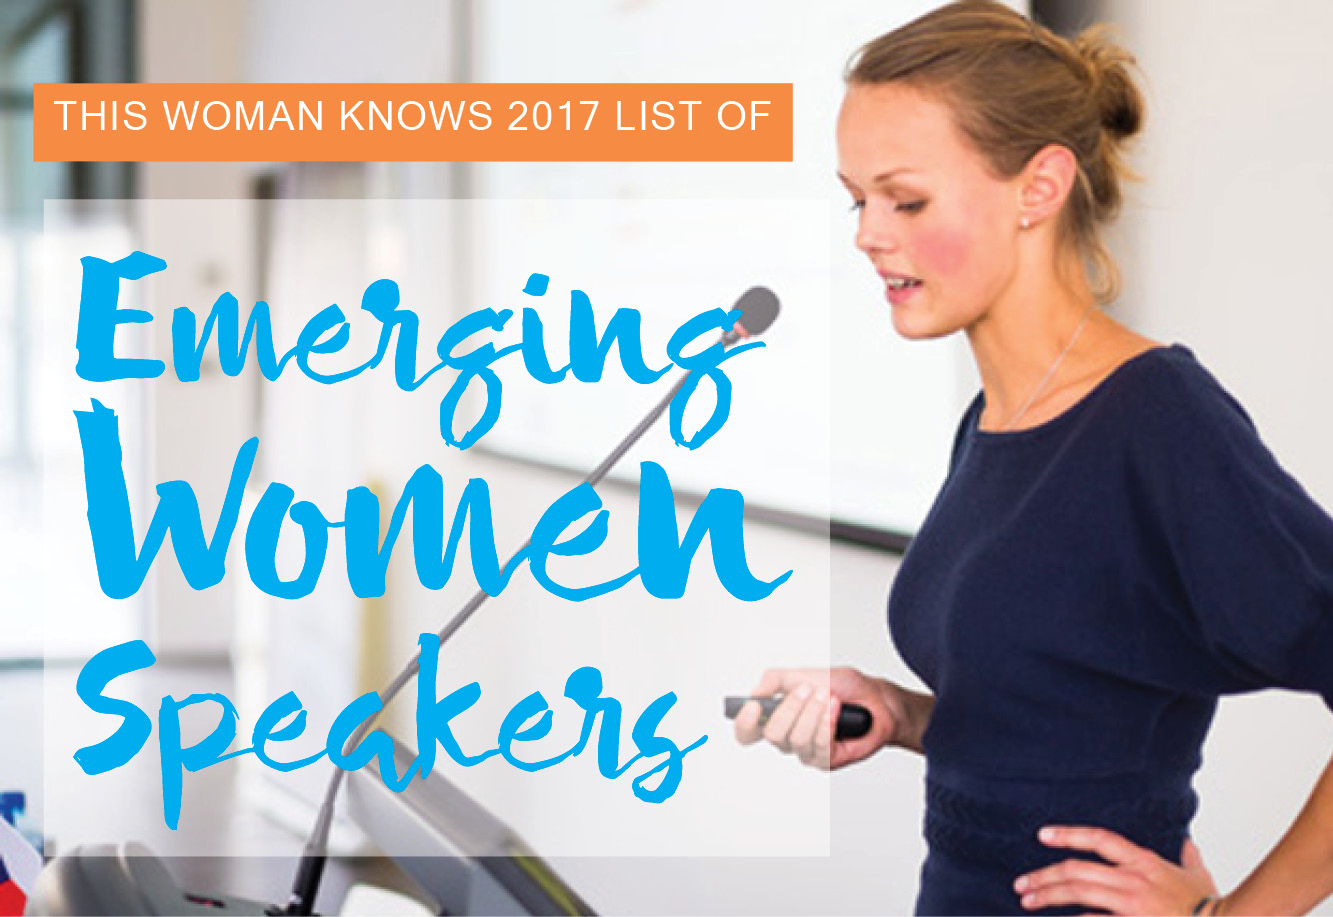 She’s Ready! TWK 2017 List of Emerging Women Speakers